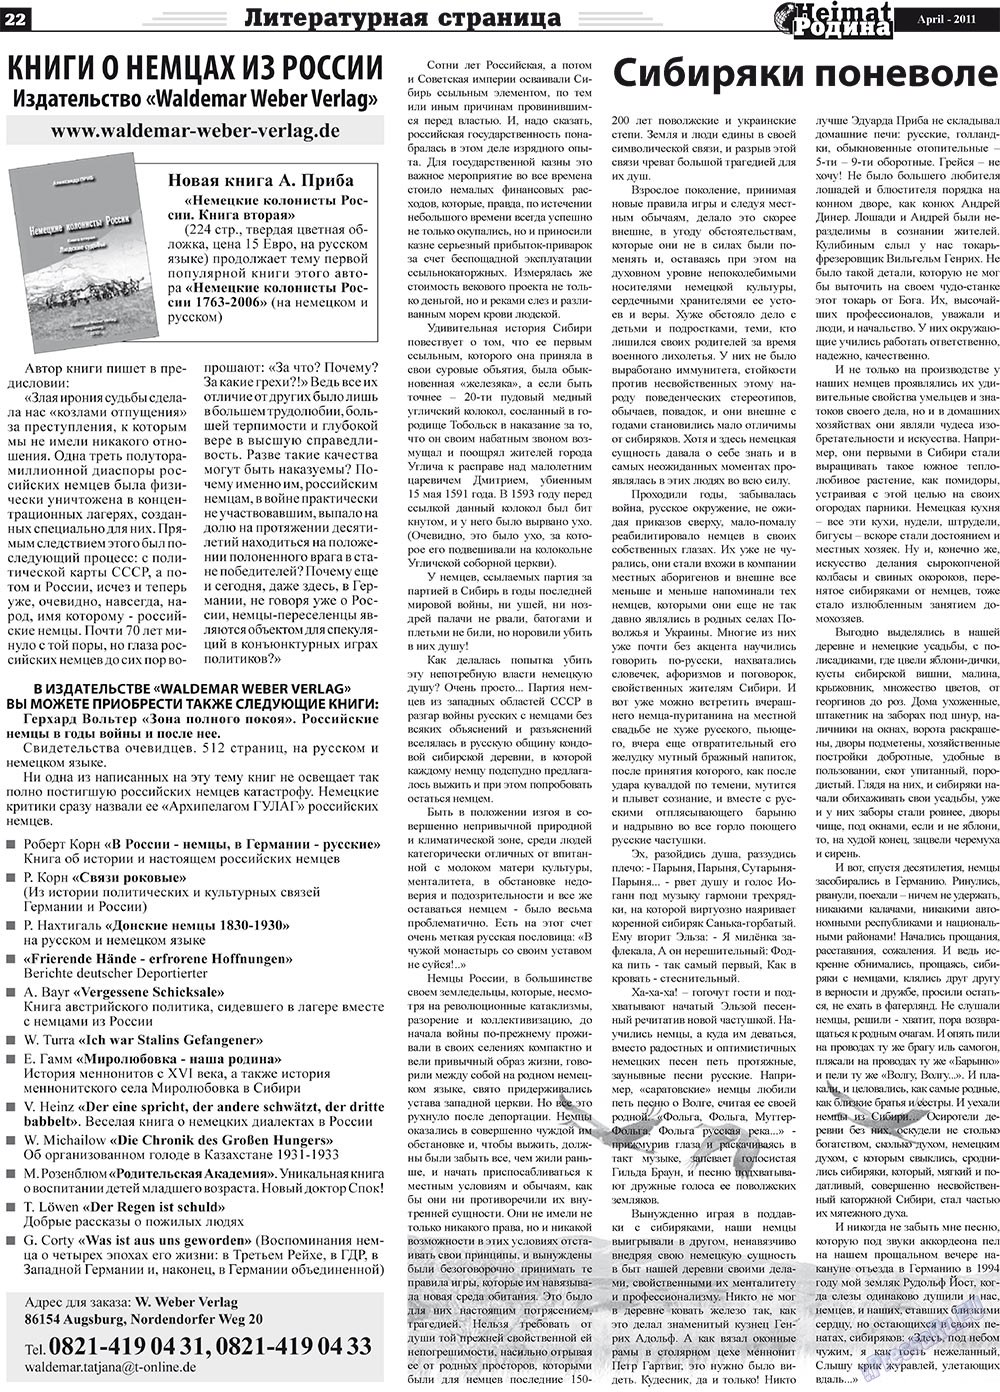 Heimat-Родина, газета. 2011 №4 стр.22